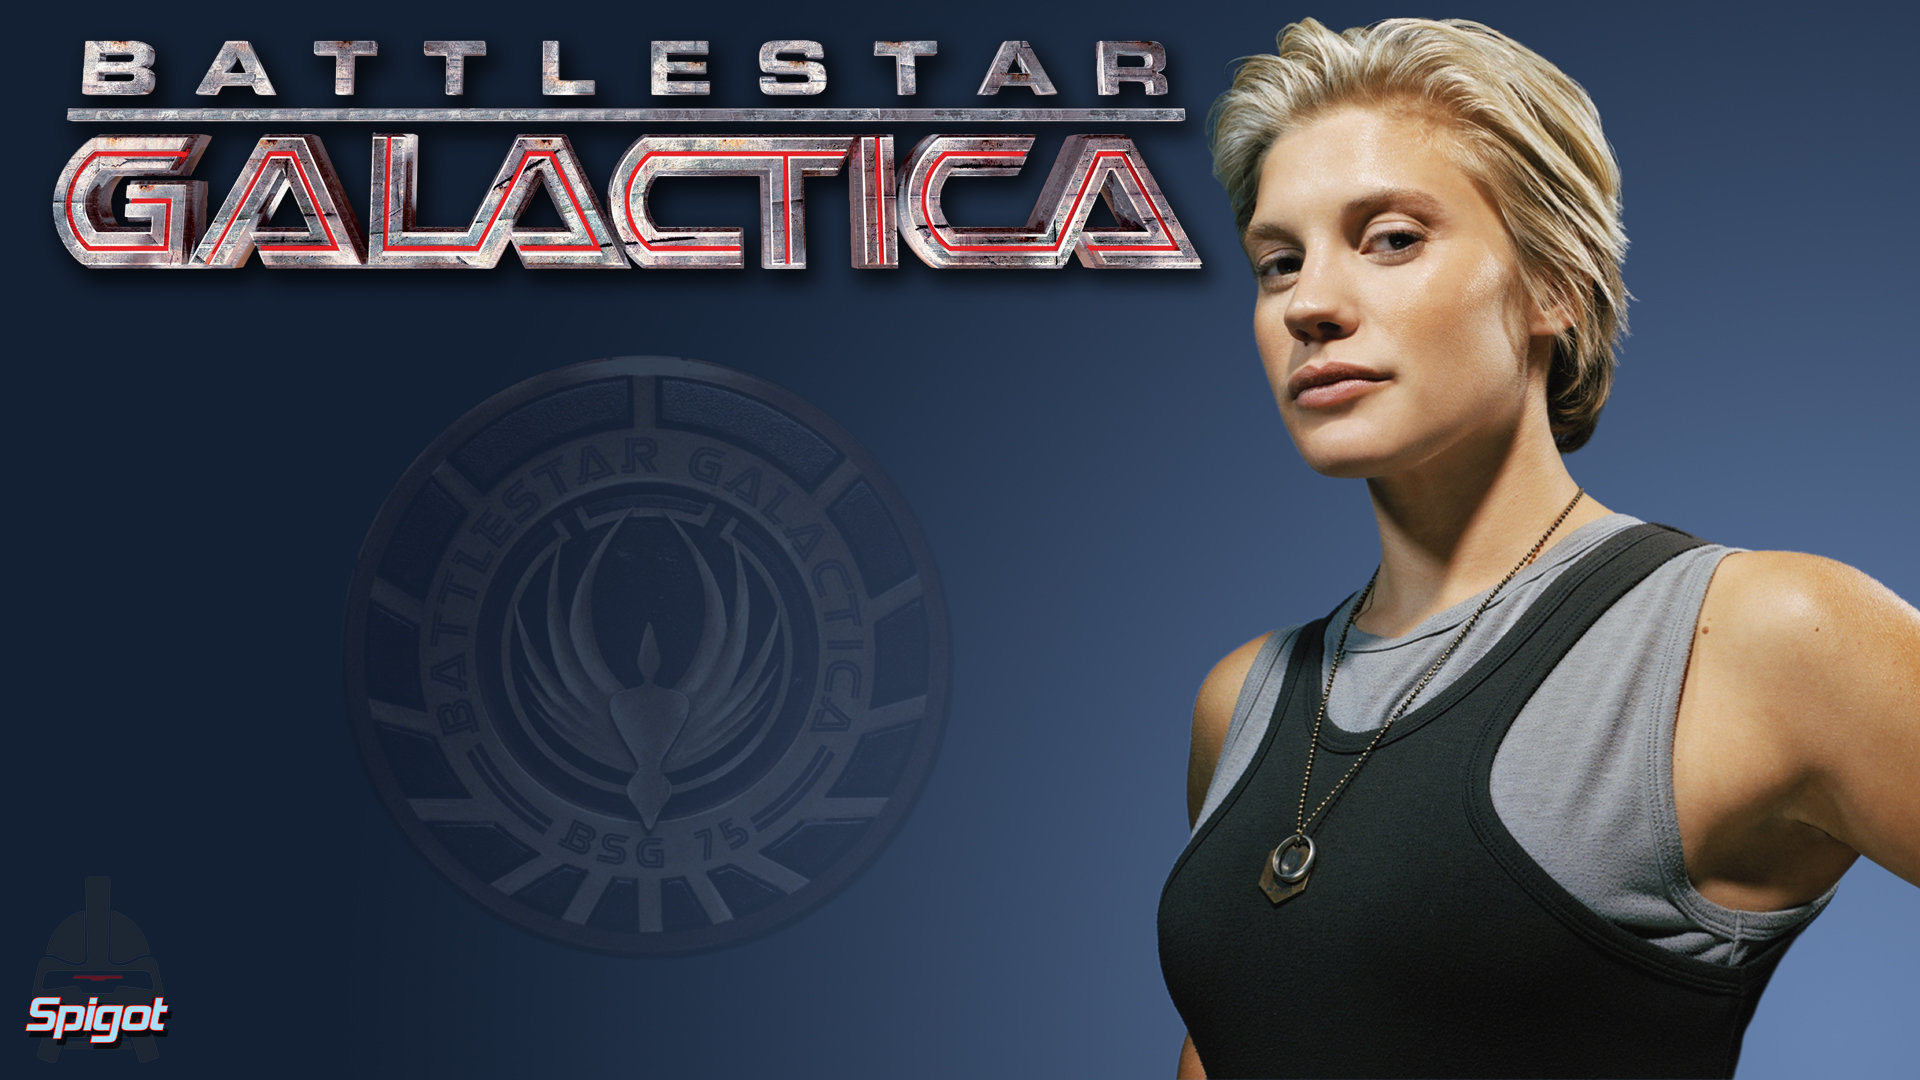 Download full hd 1080p Battlestar Galactica serial desktop background ID:122792 for free